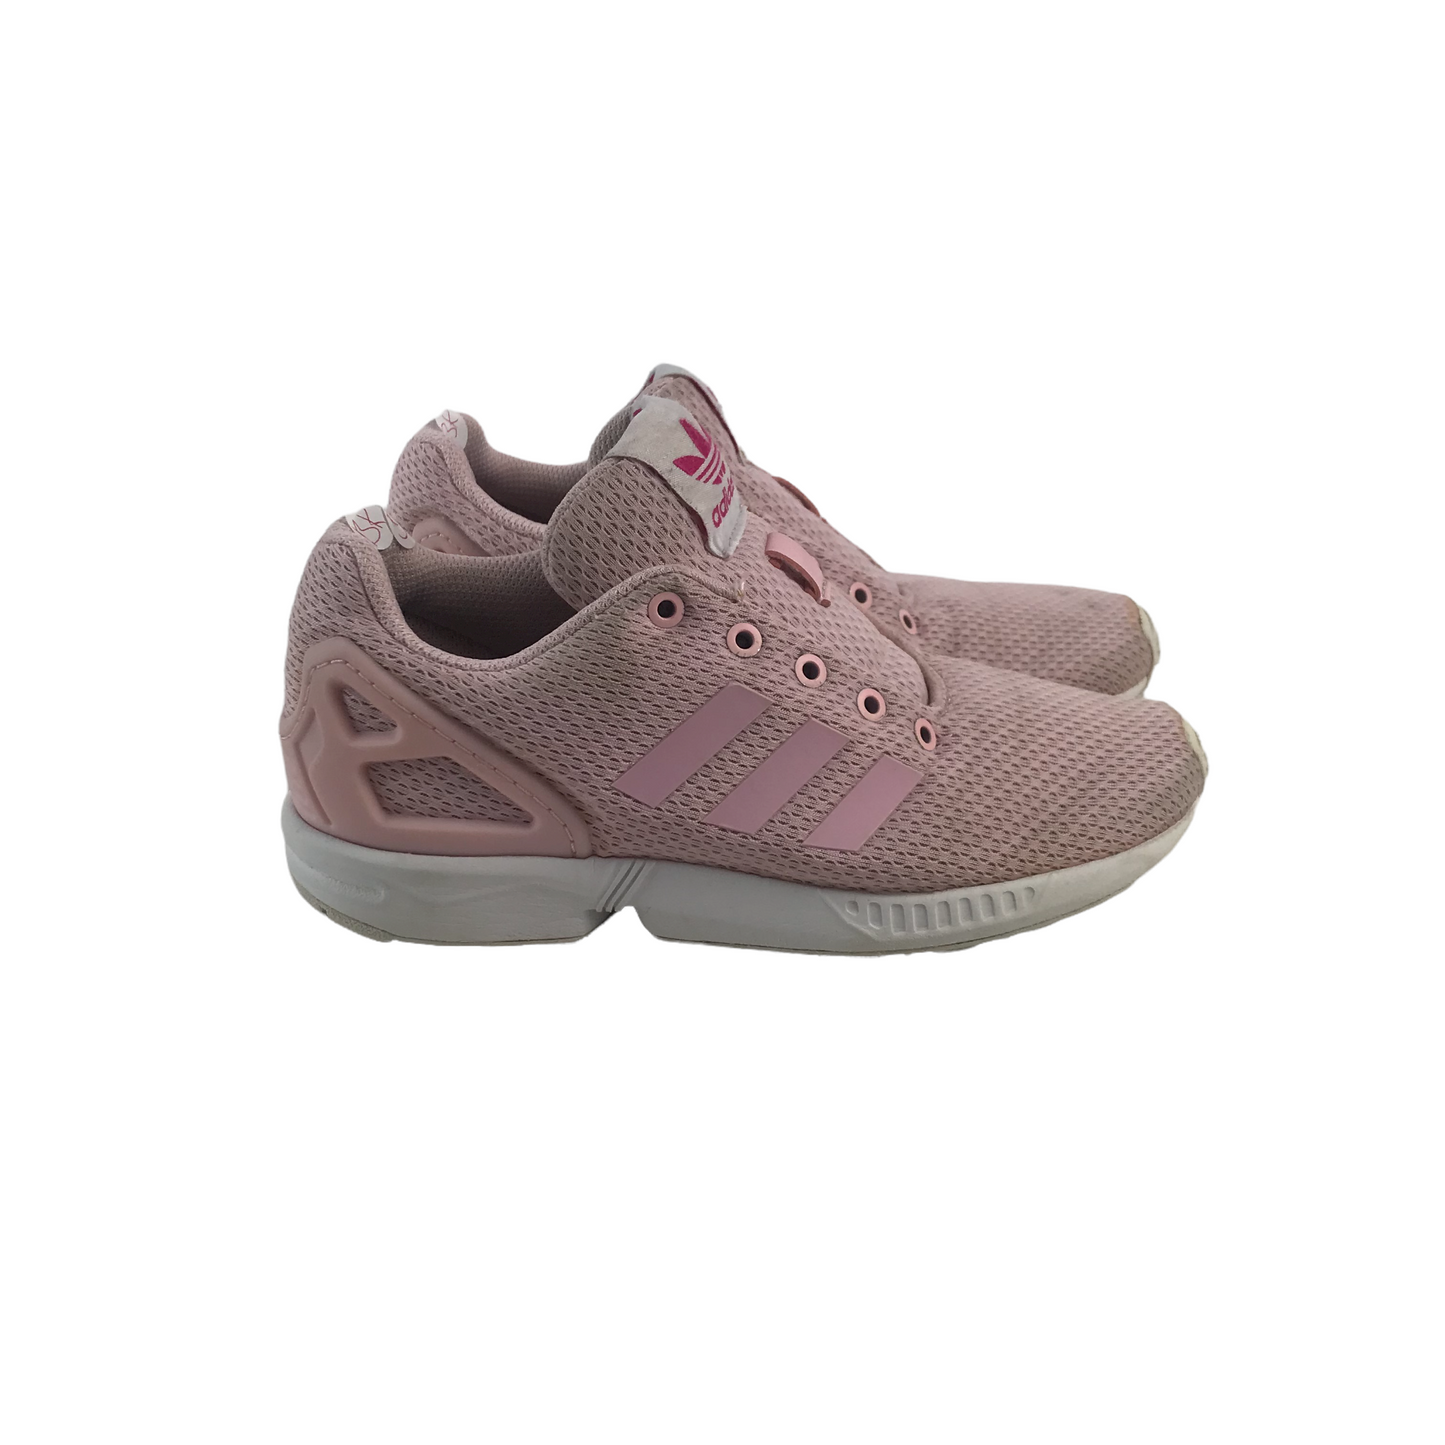 Adidas Light Pink Trainers Shoe Size 13K (jr)